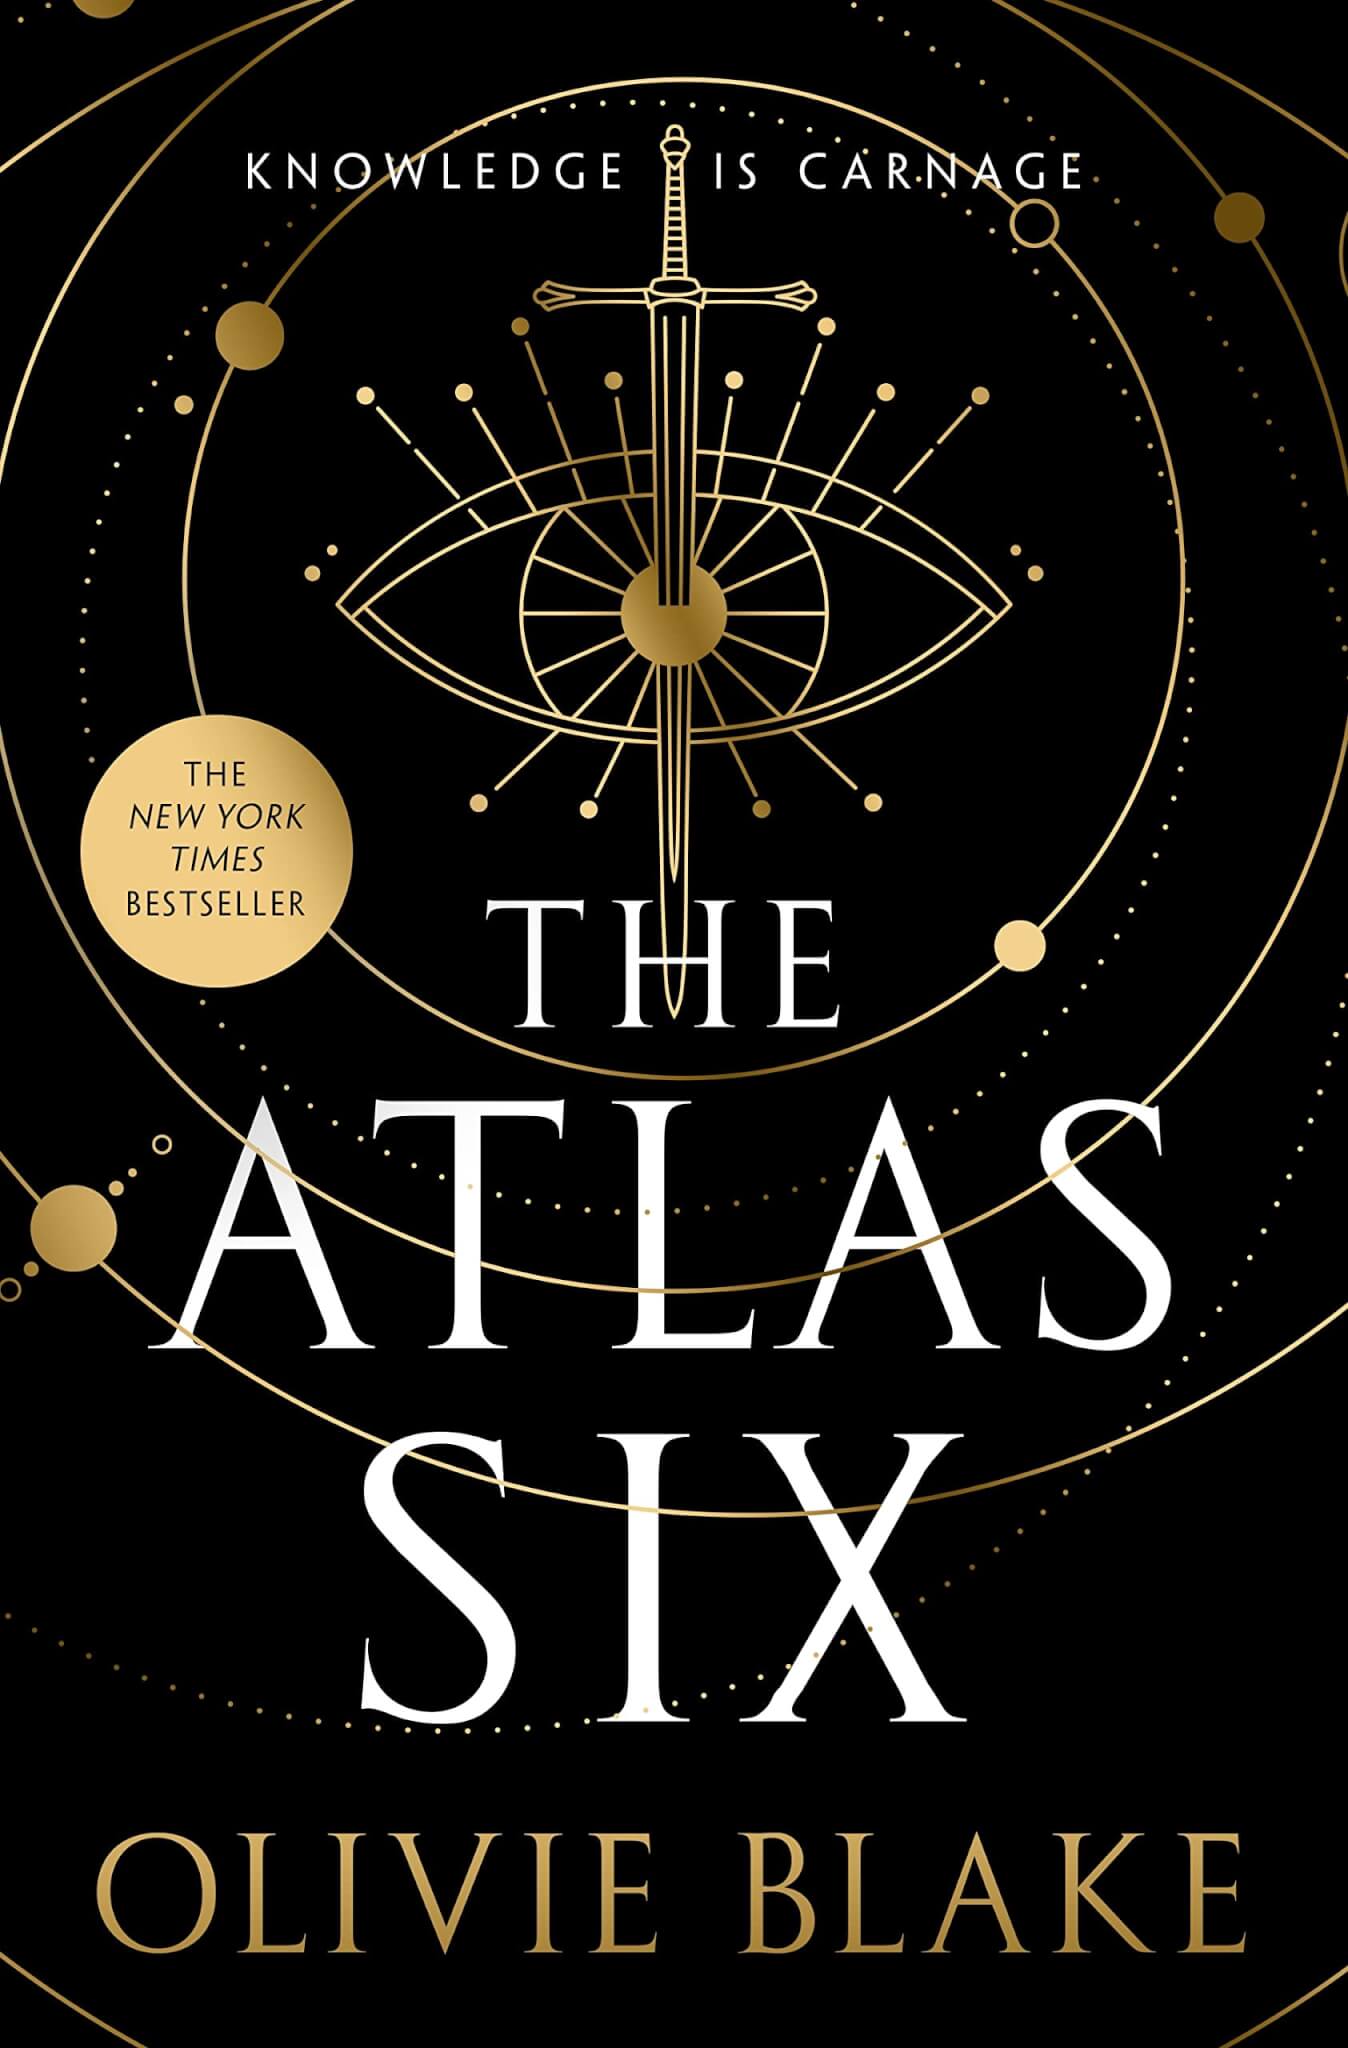 “The Atlas Six” (2020) by Olivie Blake